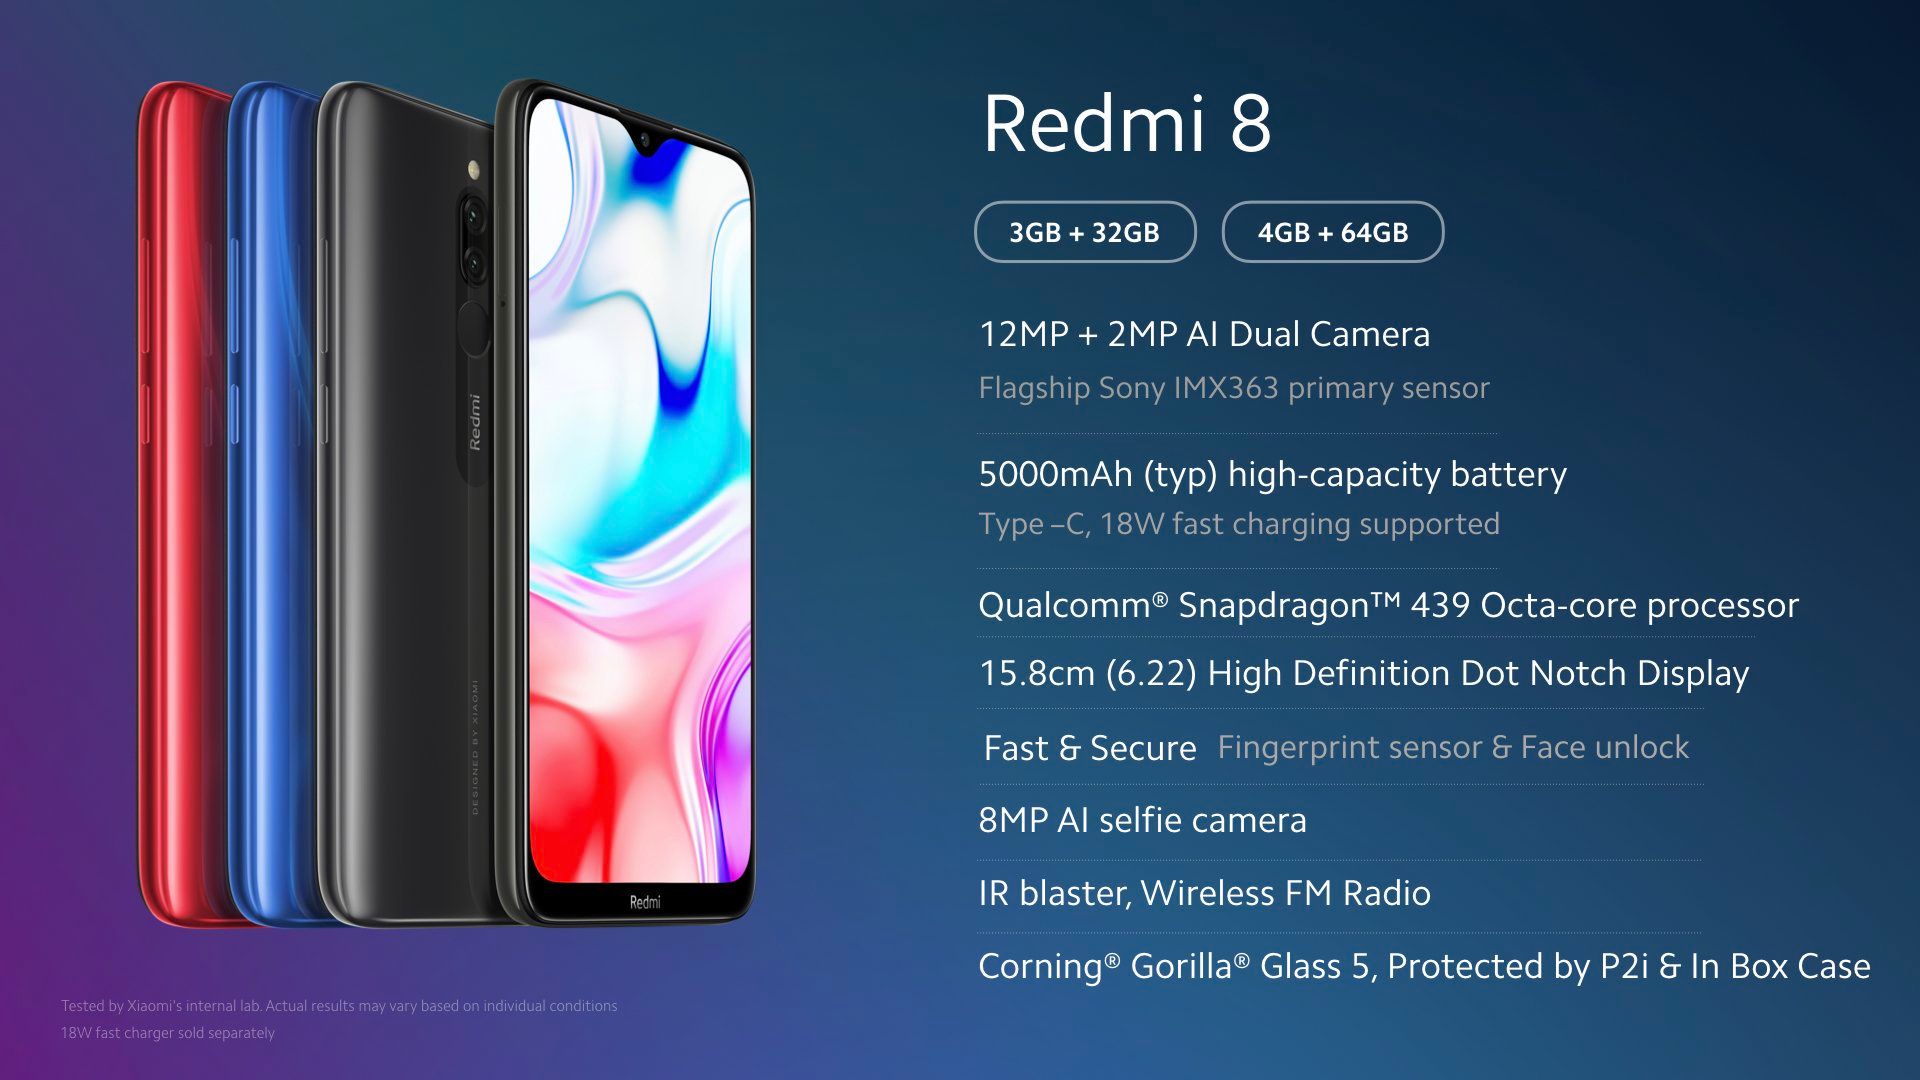 Redmi 7 64gb Характеристики